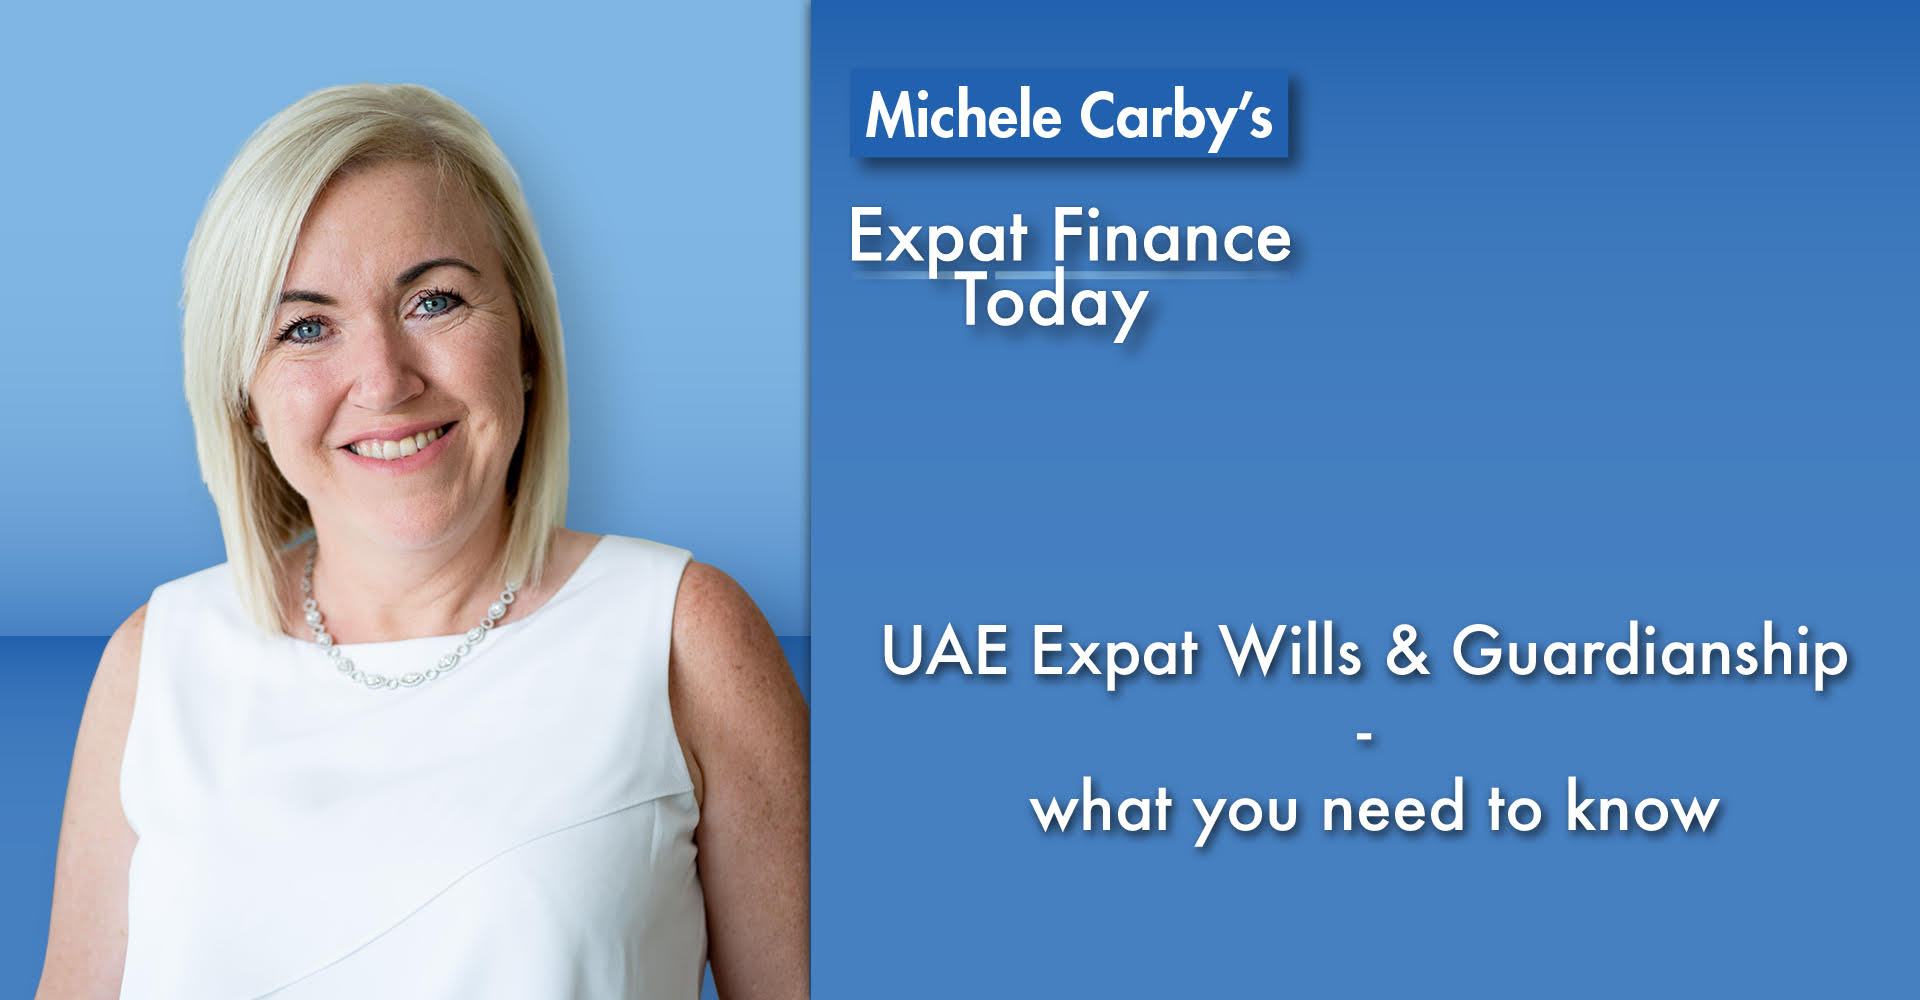 UAE expat wils and guardianship